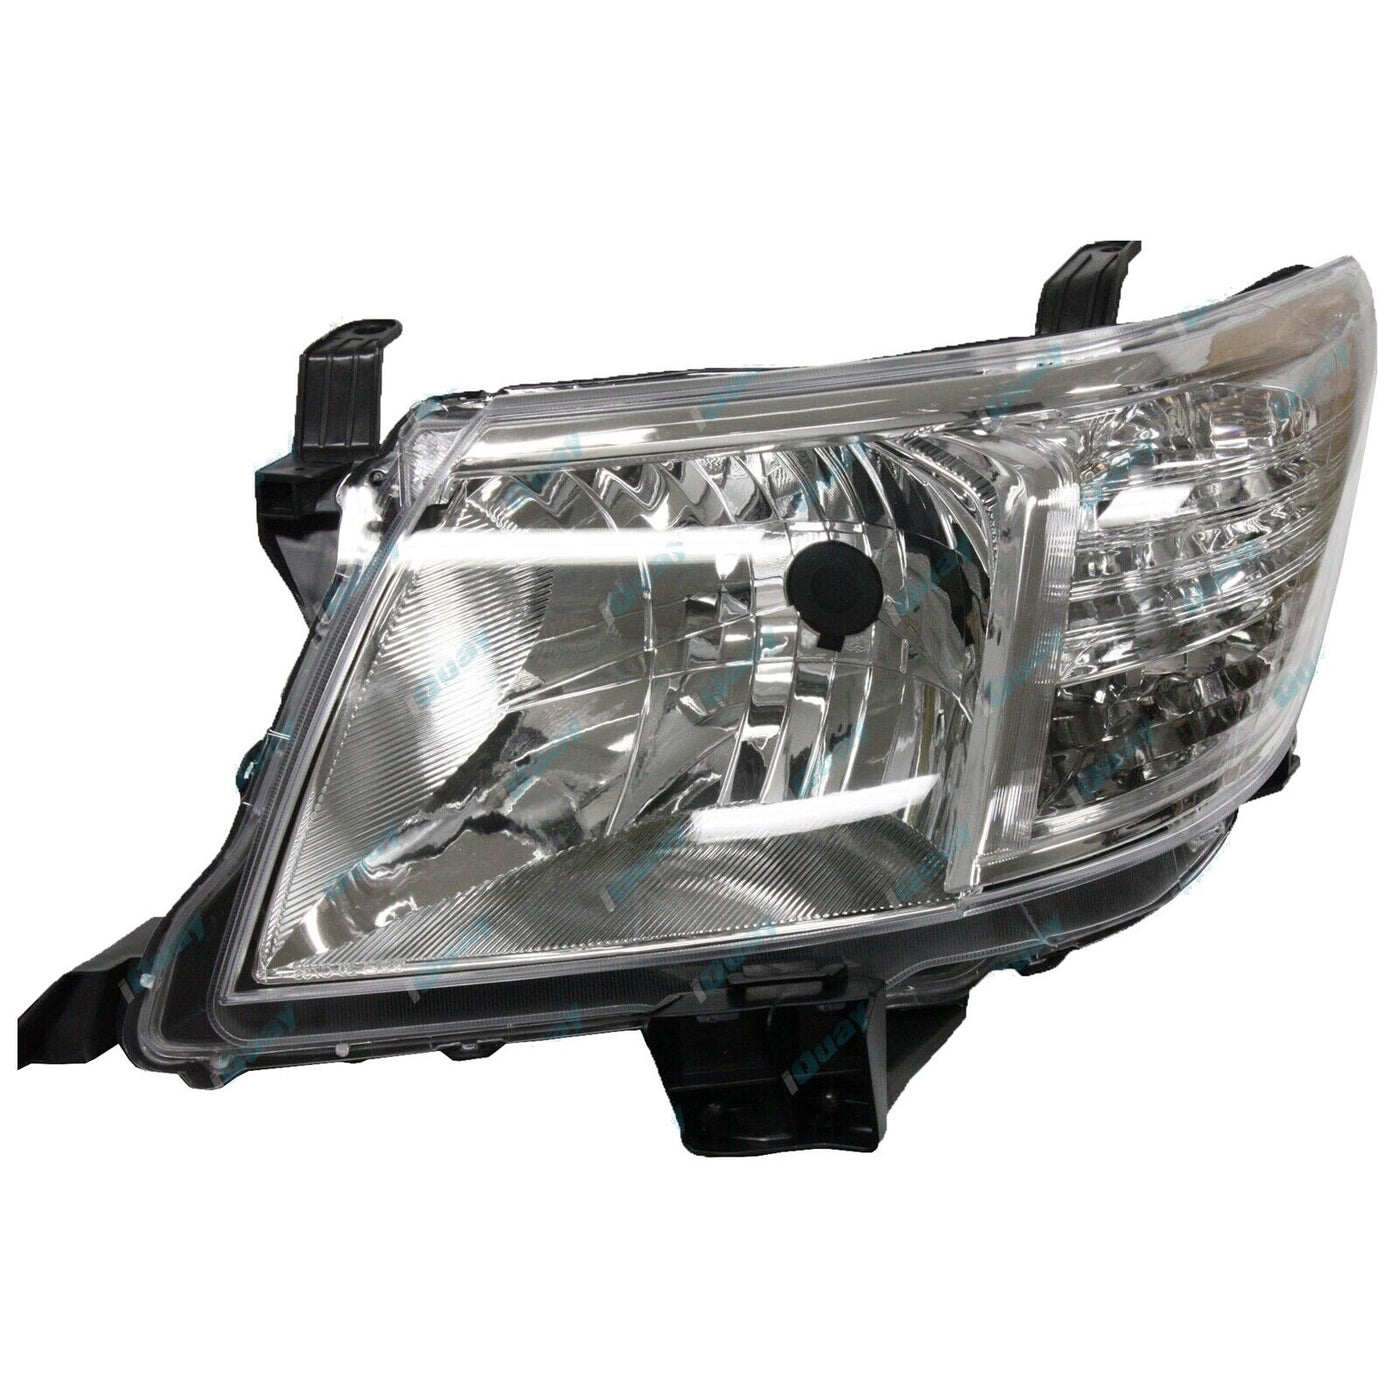 OEM Headlight Unit Pair Suitable For Toyota Hilux 2012-2014 (Pre Order) - OZI4X4 PTY LTD